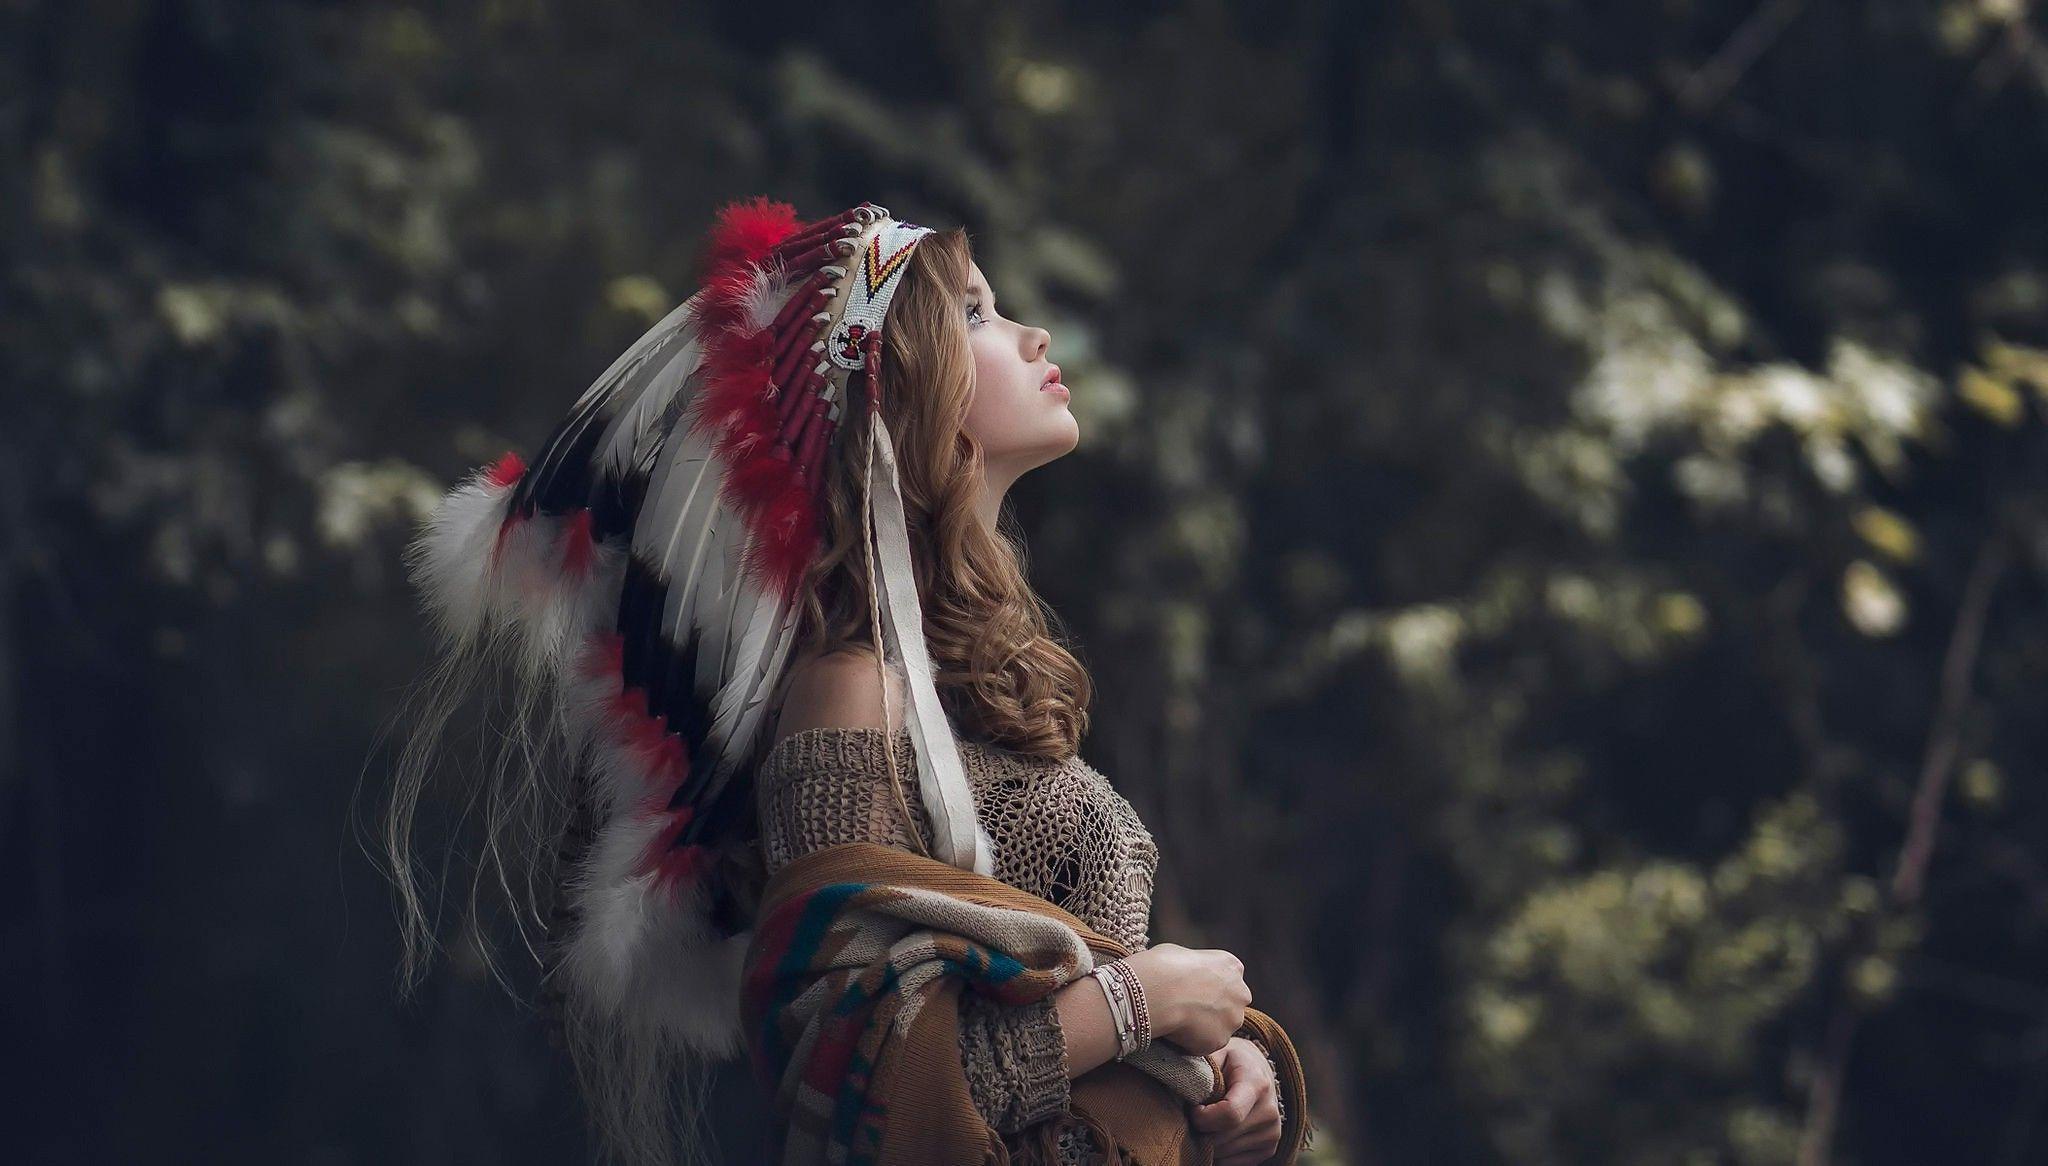 Native American Clothing HD Wallpaper Desktop Image and Photo